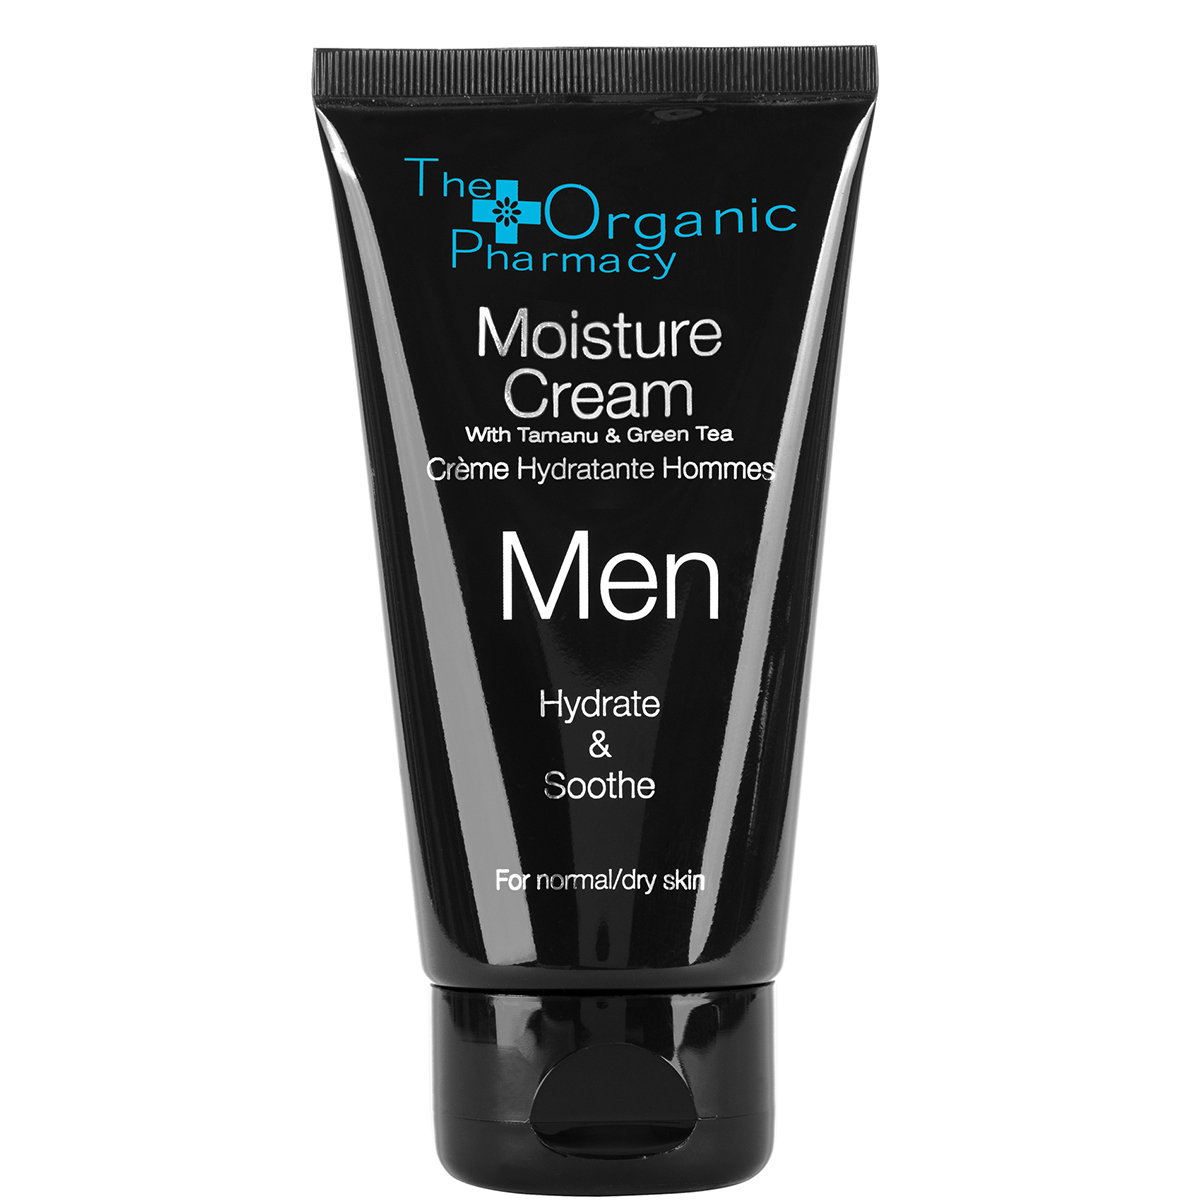 The Organic Pharmacy Men Moisture Cream